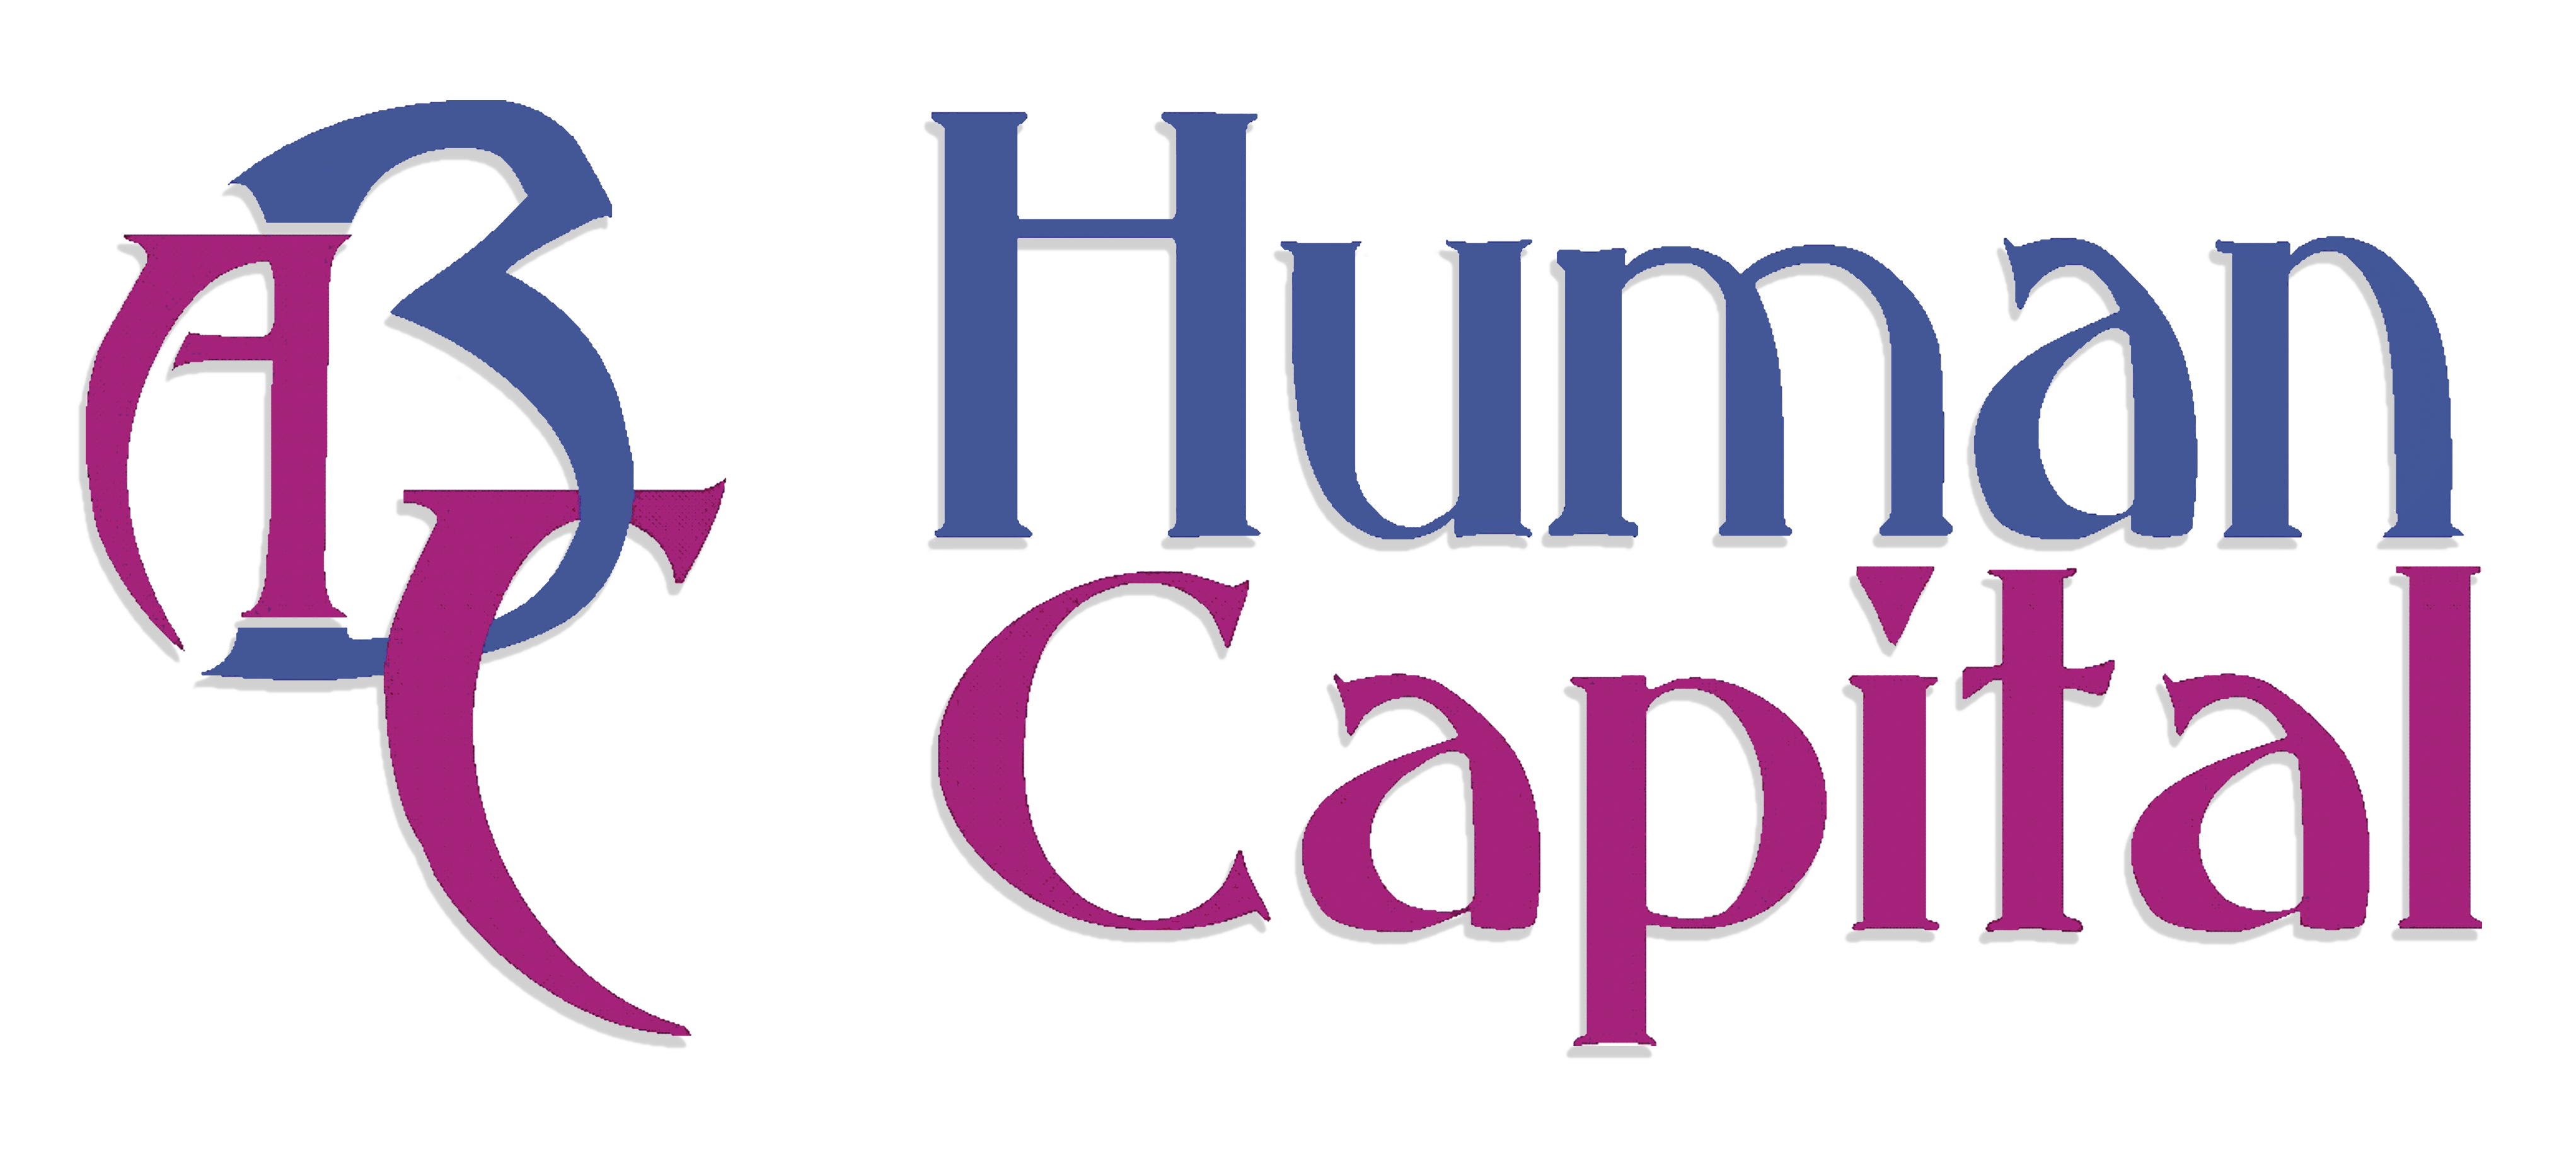 ABC Human Capital